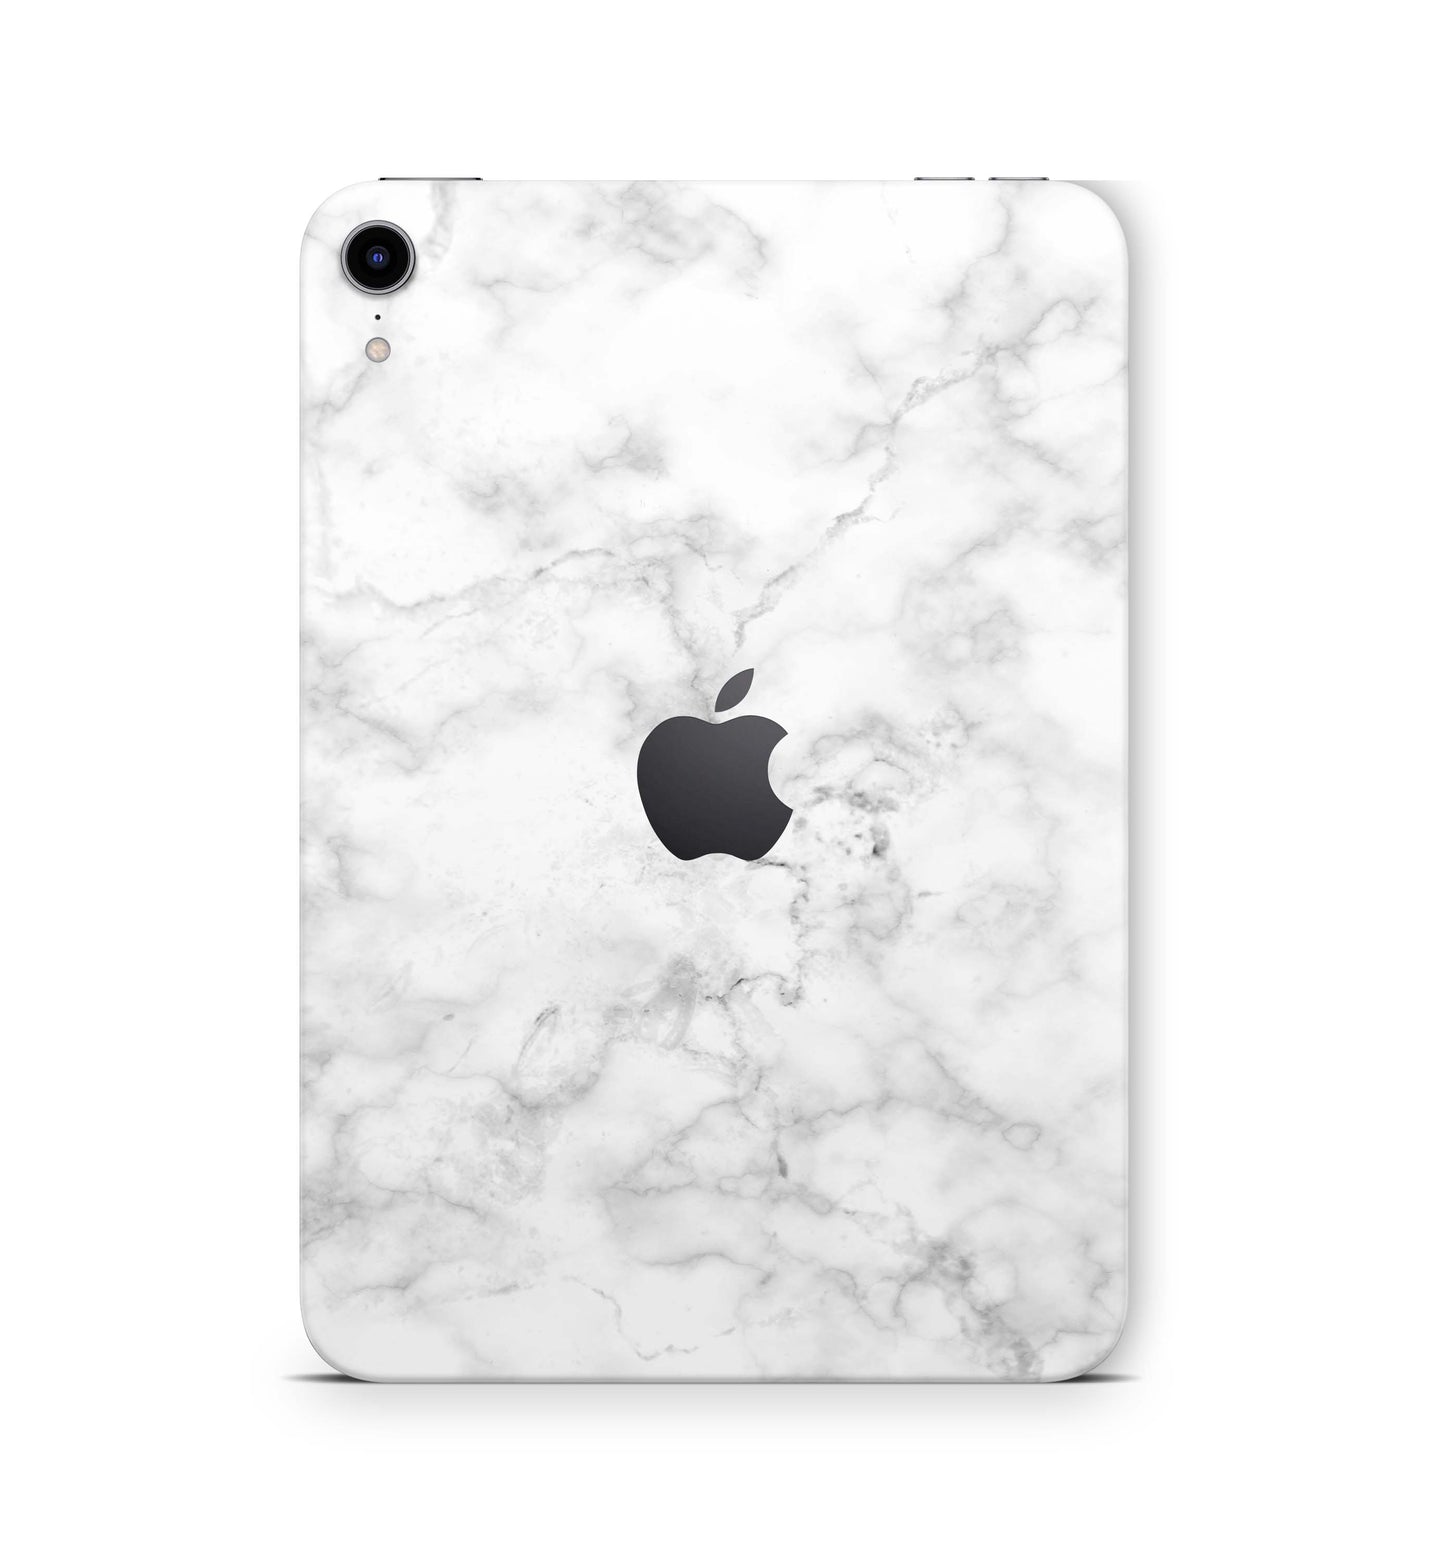 iPad Air Skin Design Cover Folie Vinyl Skins & Wraps für alle iPad Air Modelle Aufkleber Skins4u Marmor Rose  